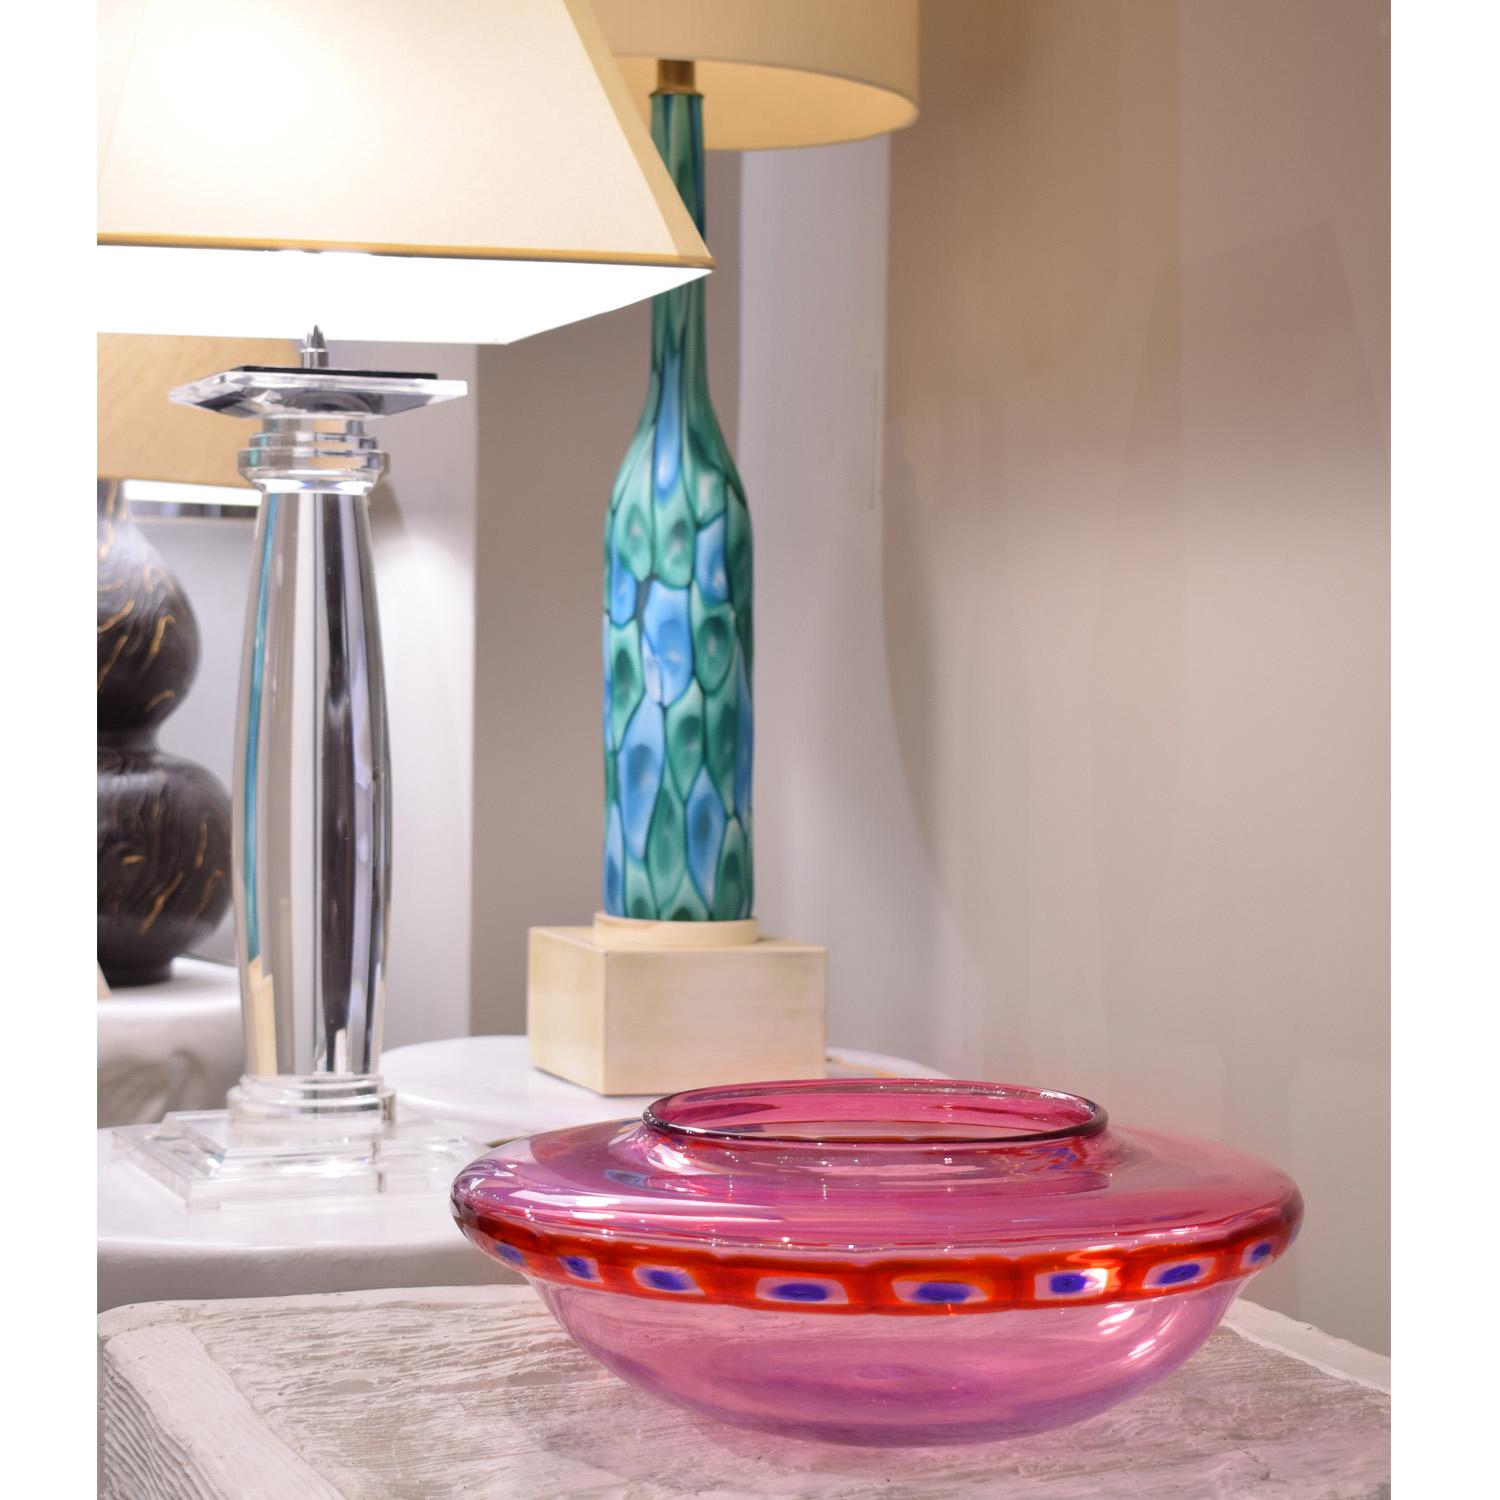 Italian Handblown Glass Vase with Multicolor Murrhines by Anzolo Fuga for A.V.E.M 1950s For Sale